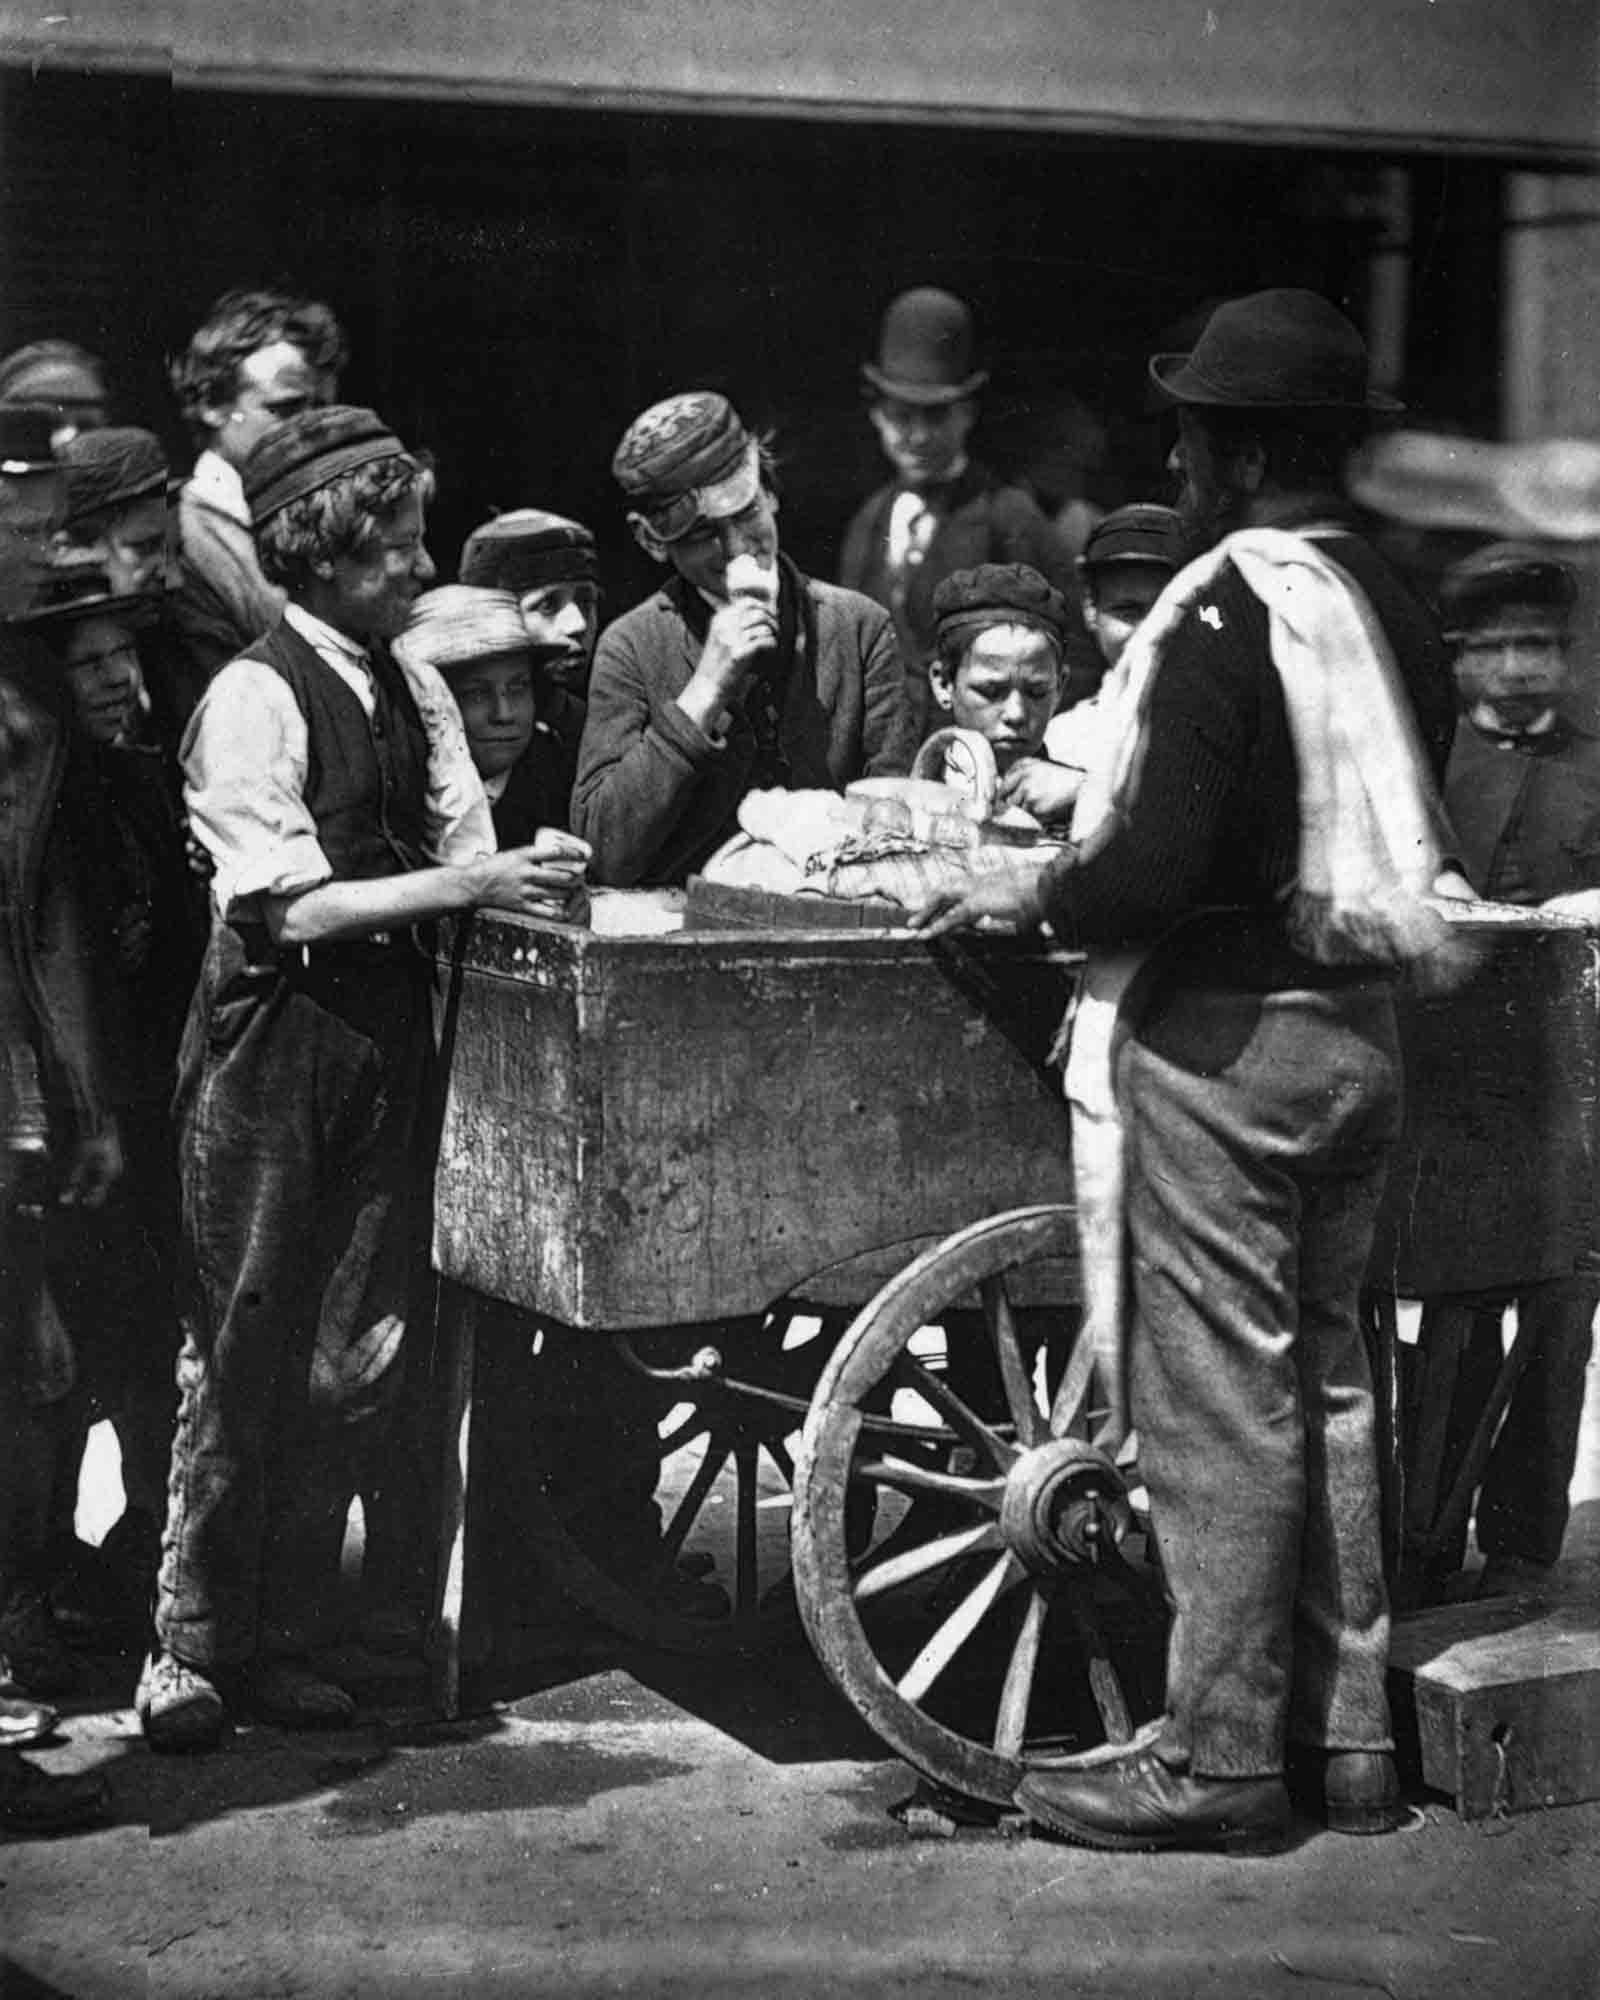 A street vendor sells halfpenny ices, 1876.